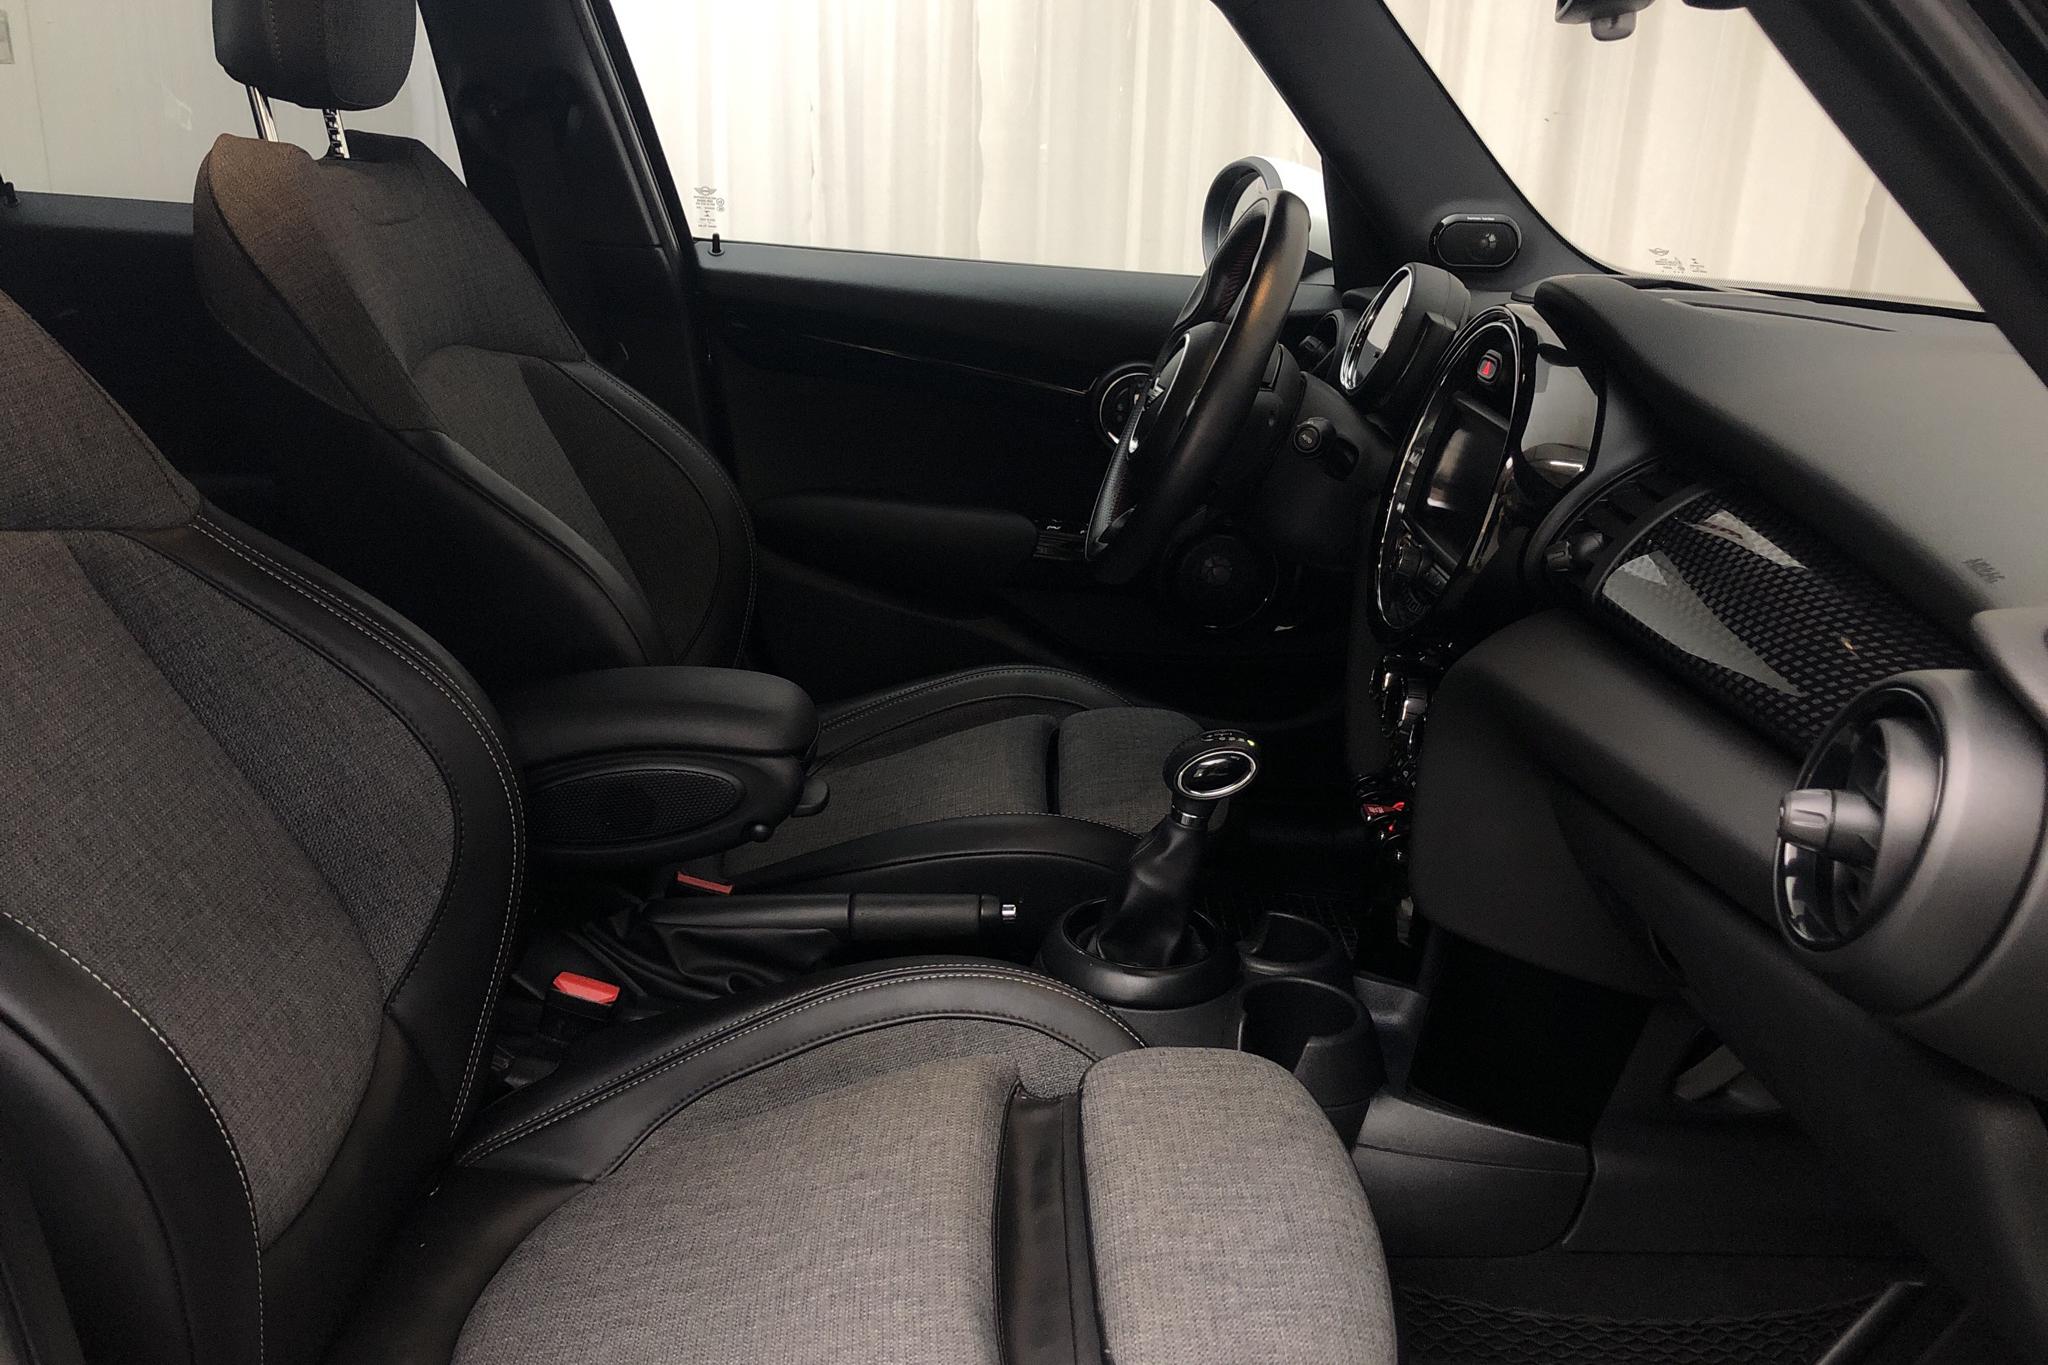 MINI Cooper S Hatch 5dr (192hk) - 82 190 km - Automatic - black - 2018